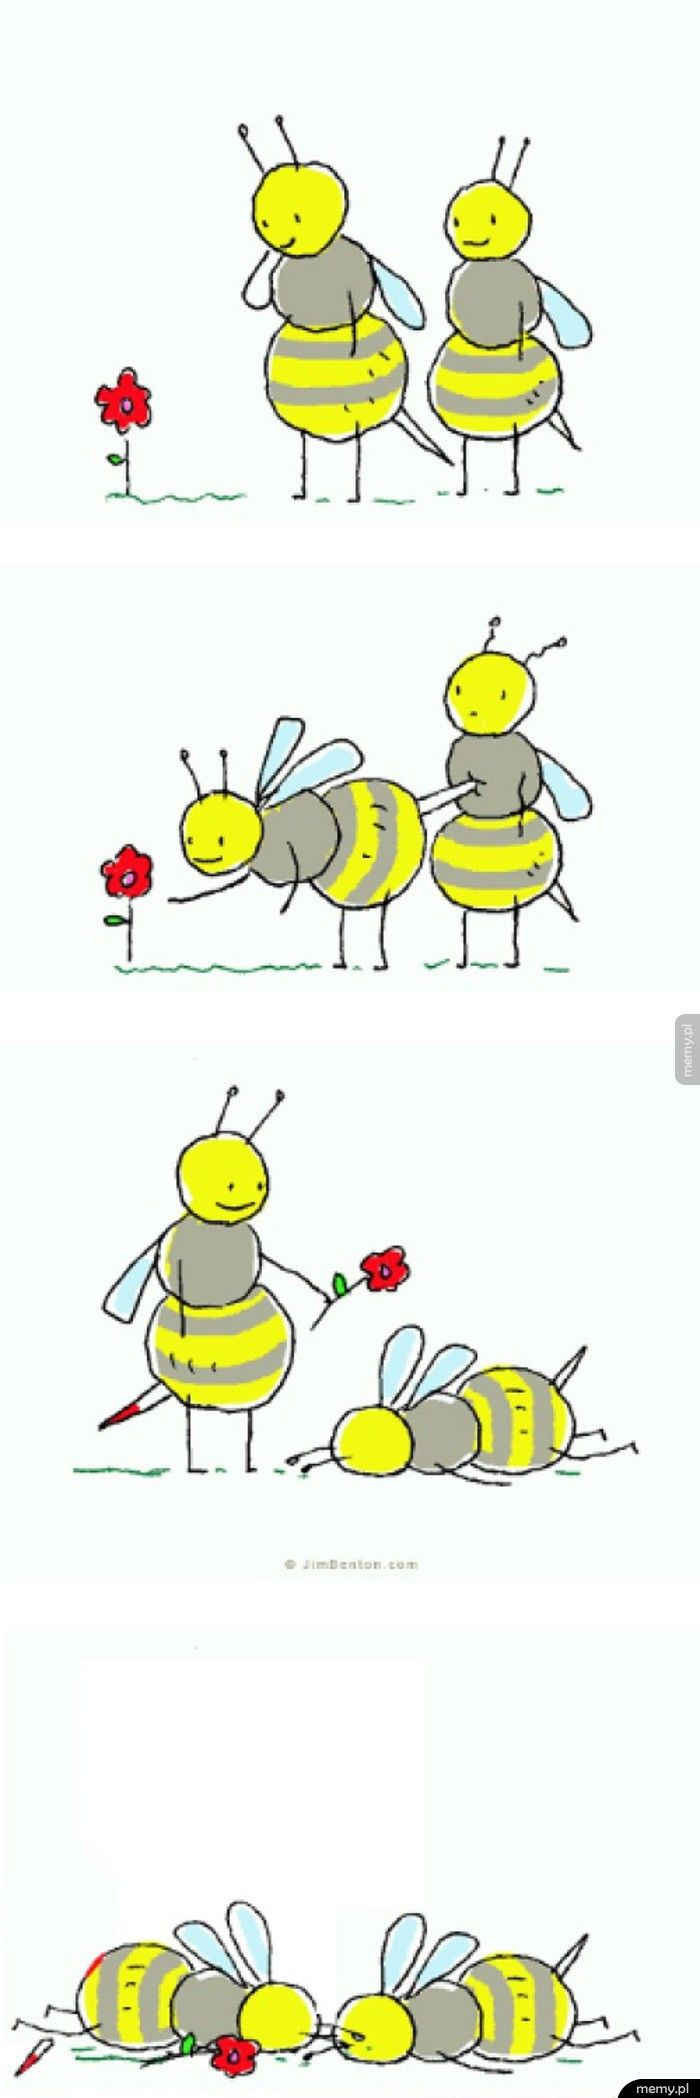 Problemy pszczół